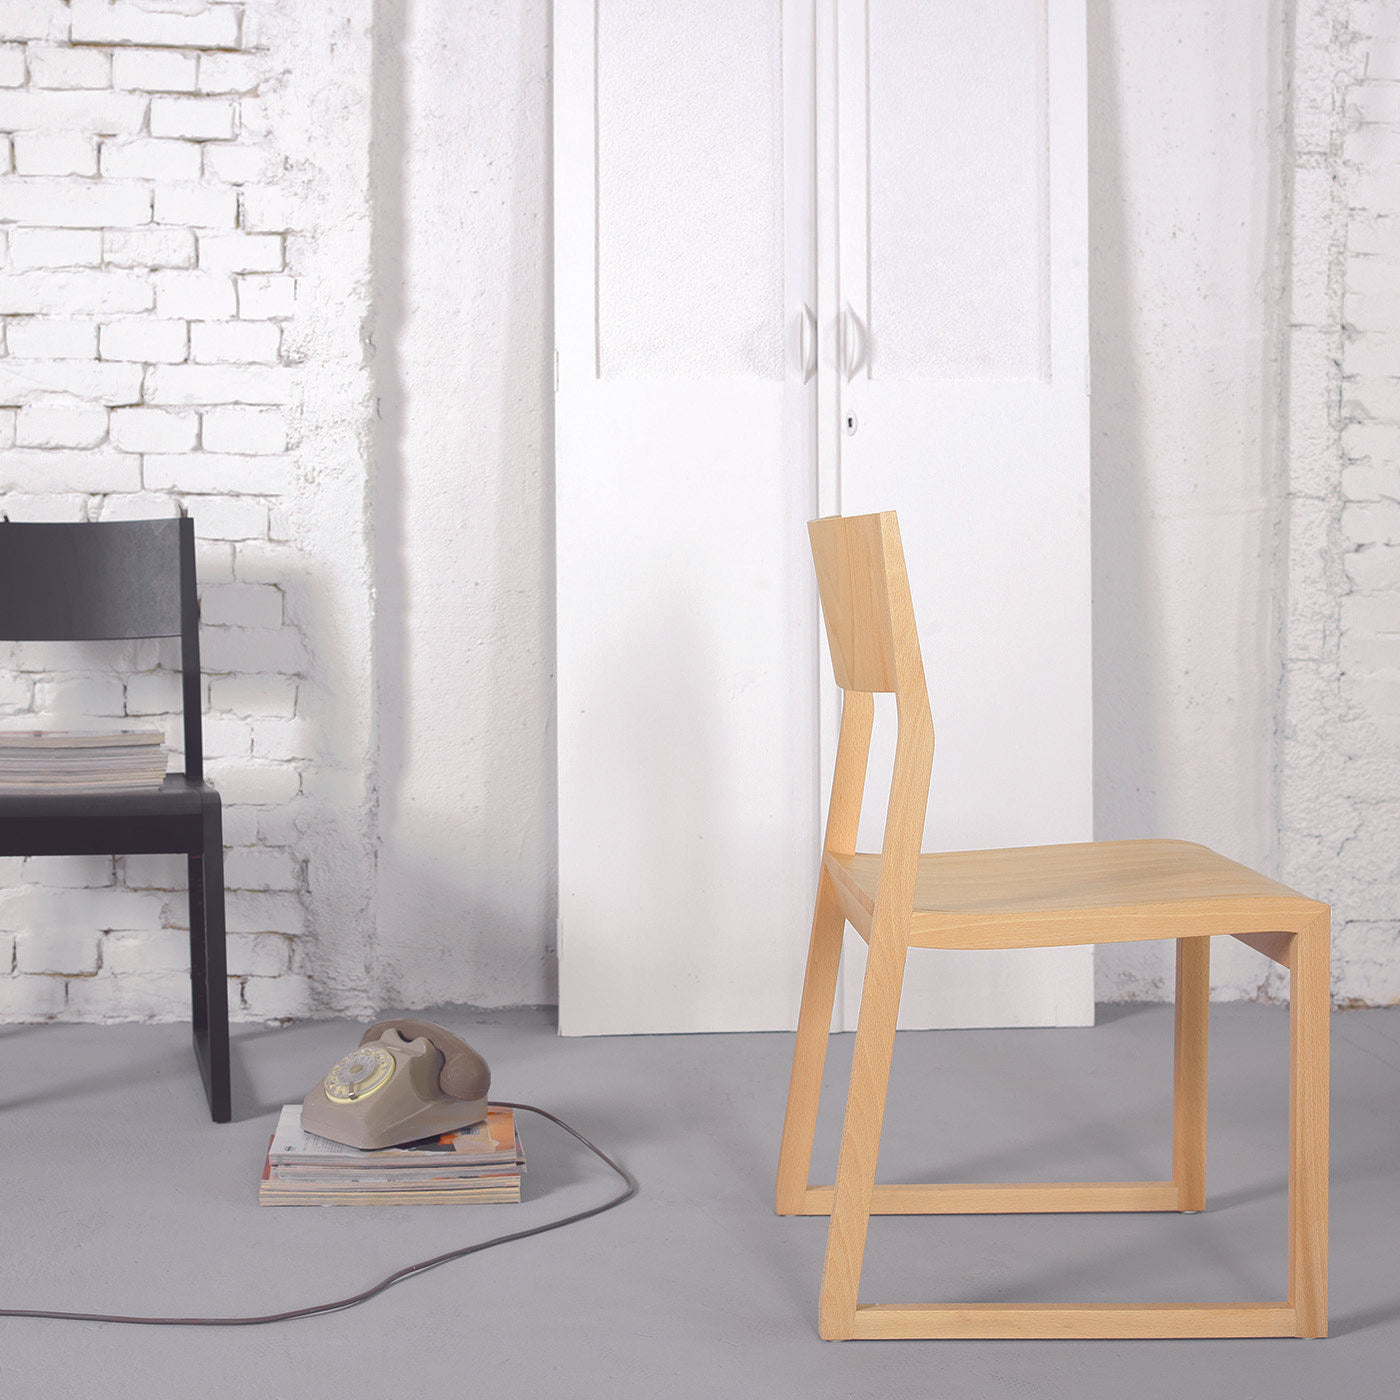 Set of 2 Natural Sciza Chairs by Takashi Kirimoto - Alternative view 1